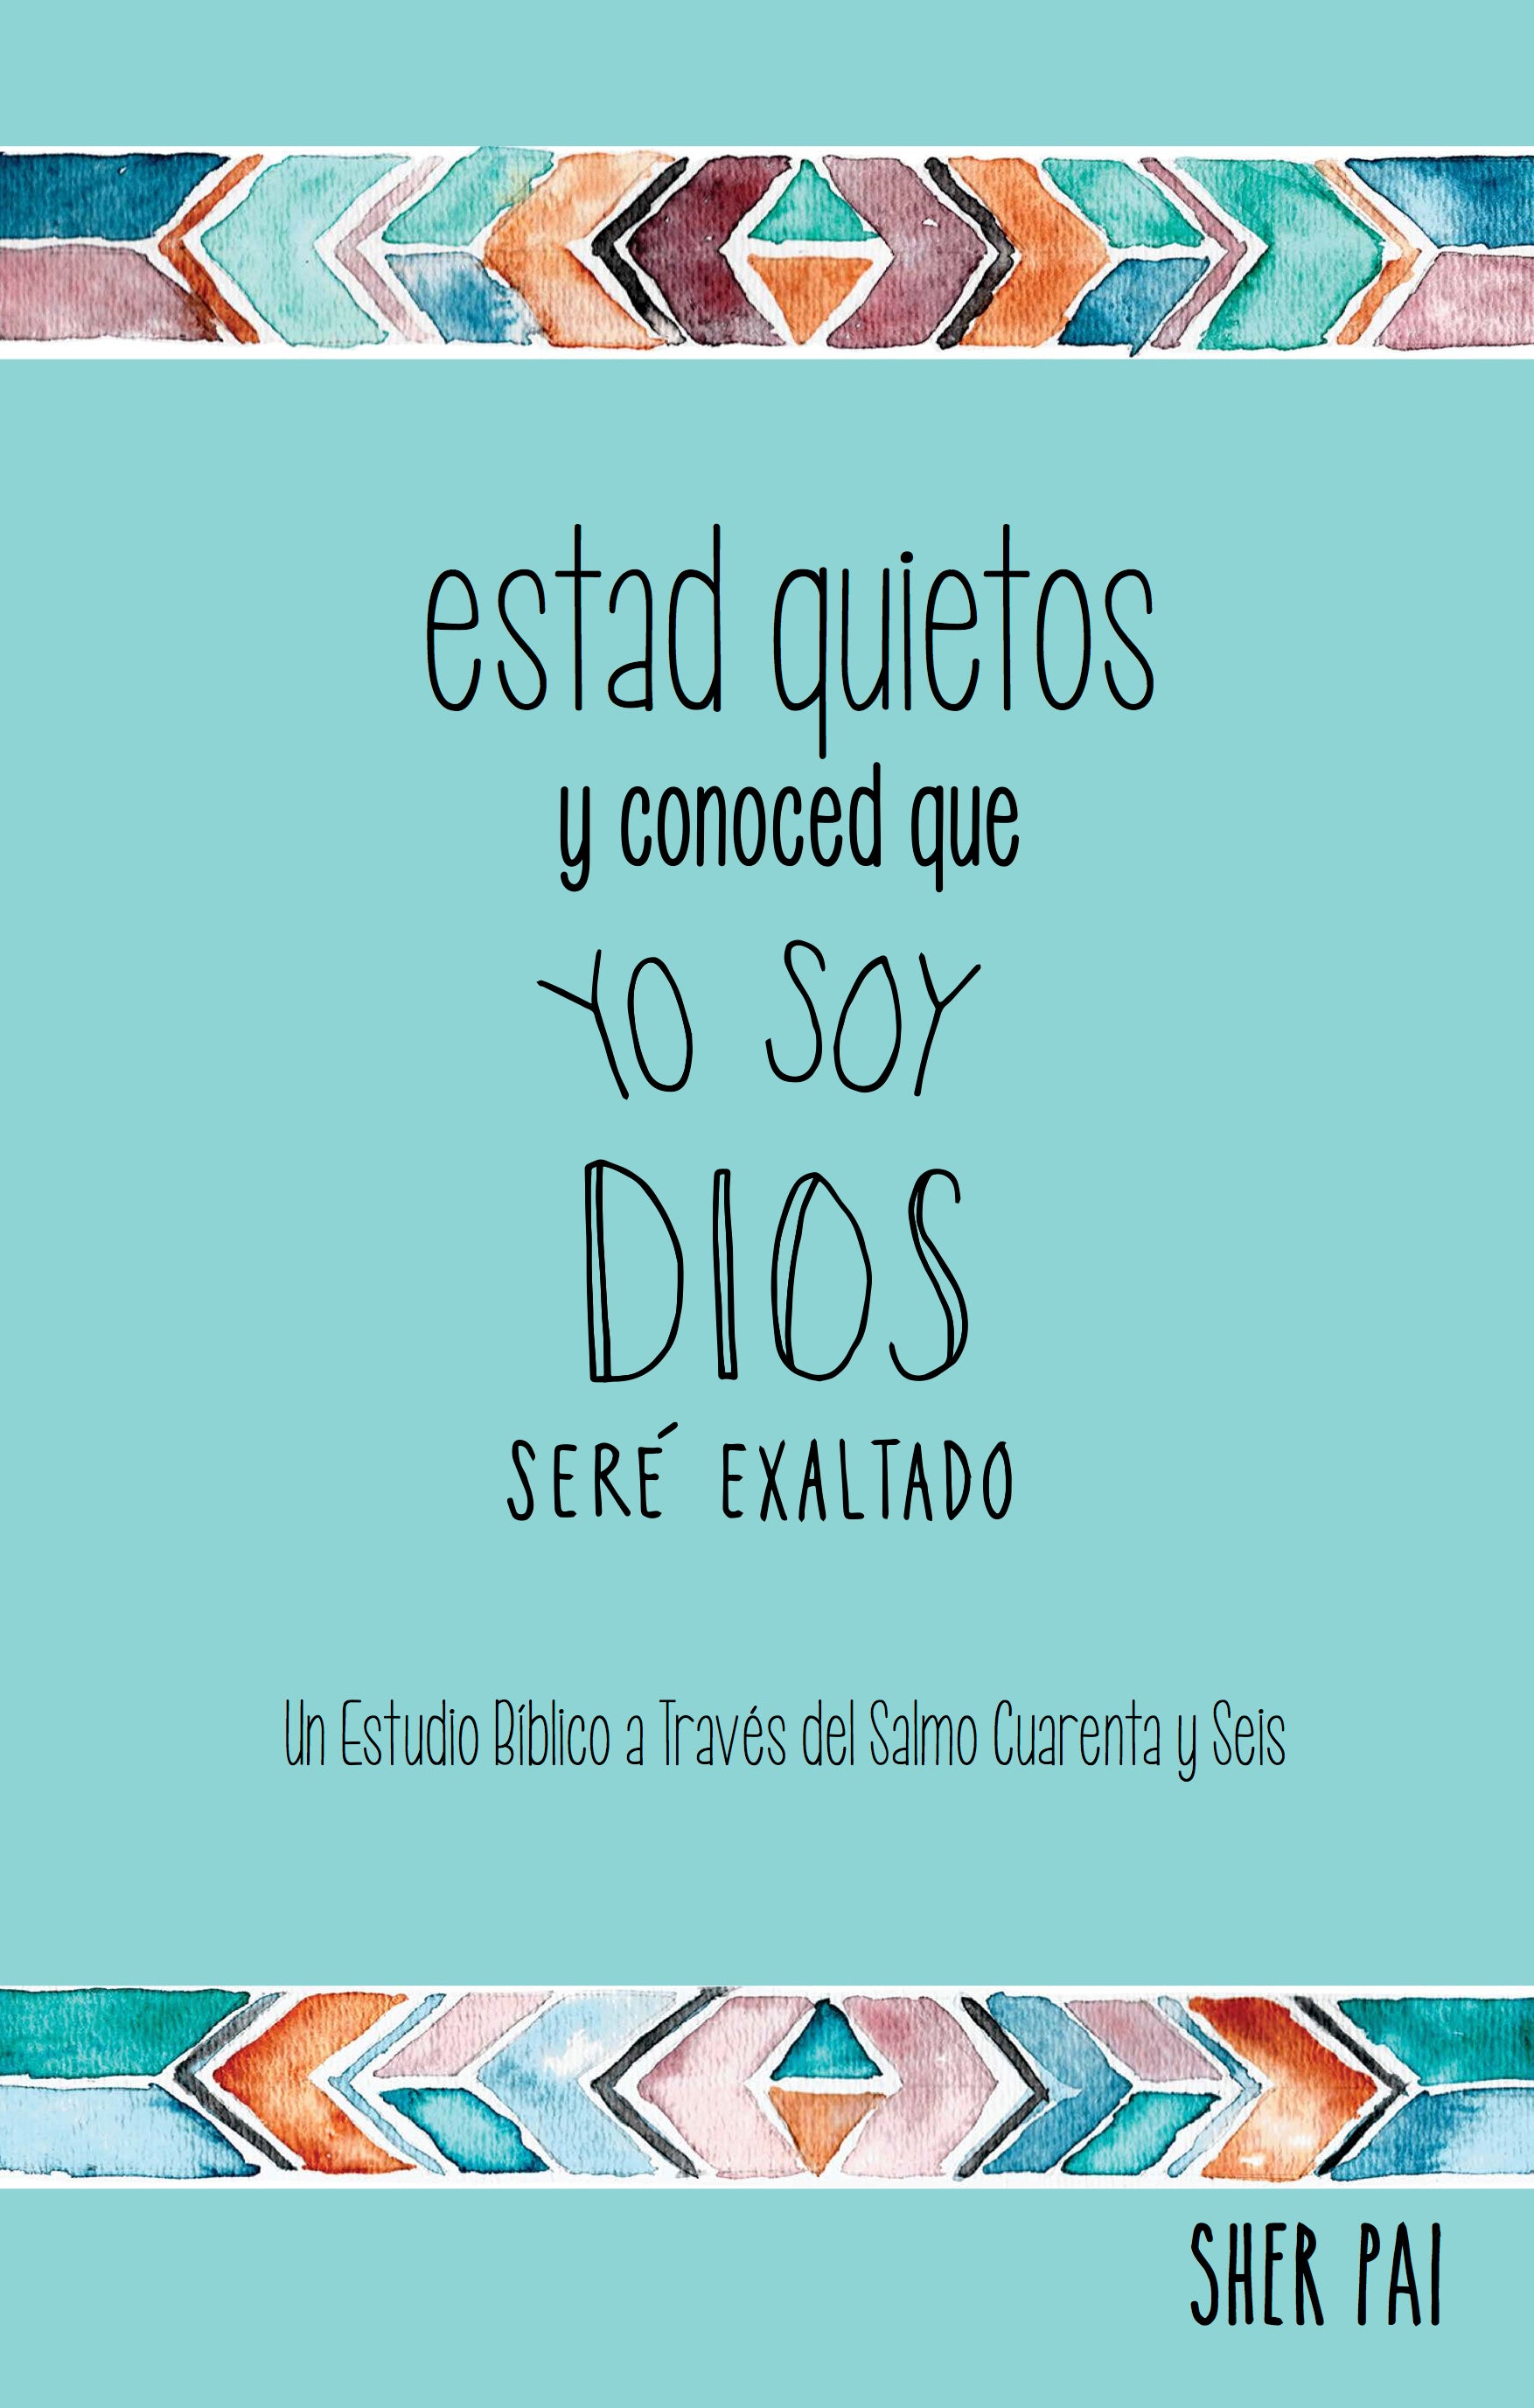 Estad Quietos Y Conoced Que Yo Soy Dios, Spanish Translation of Be Still and Know That I Am God